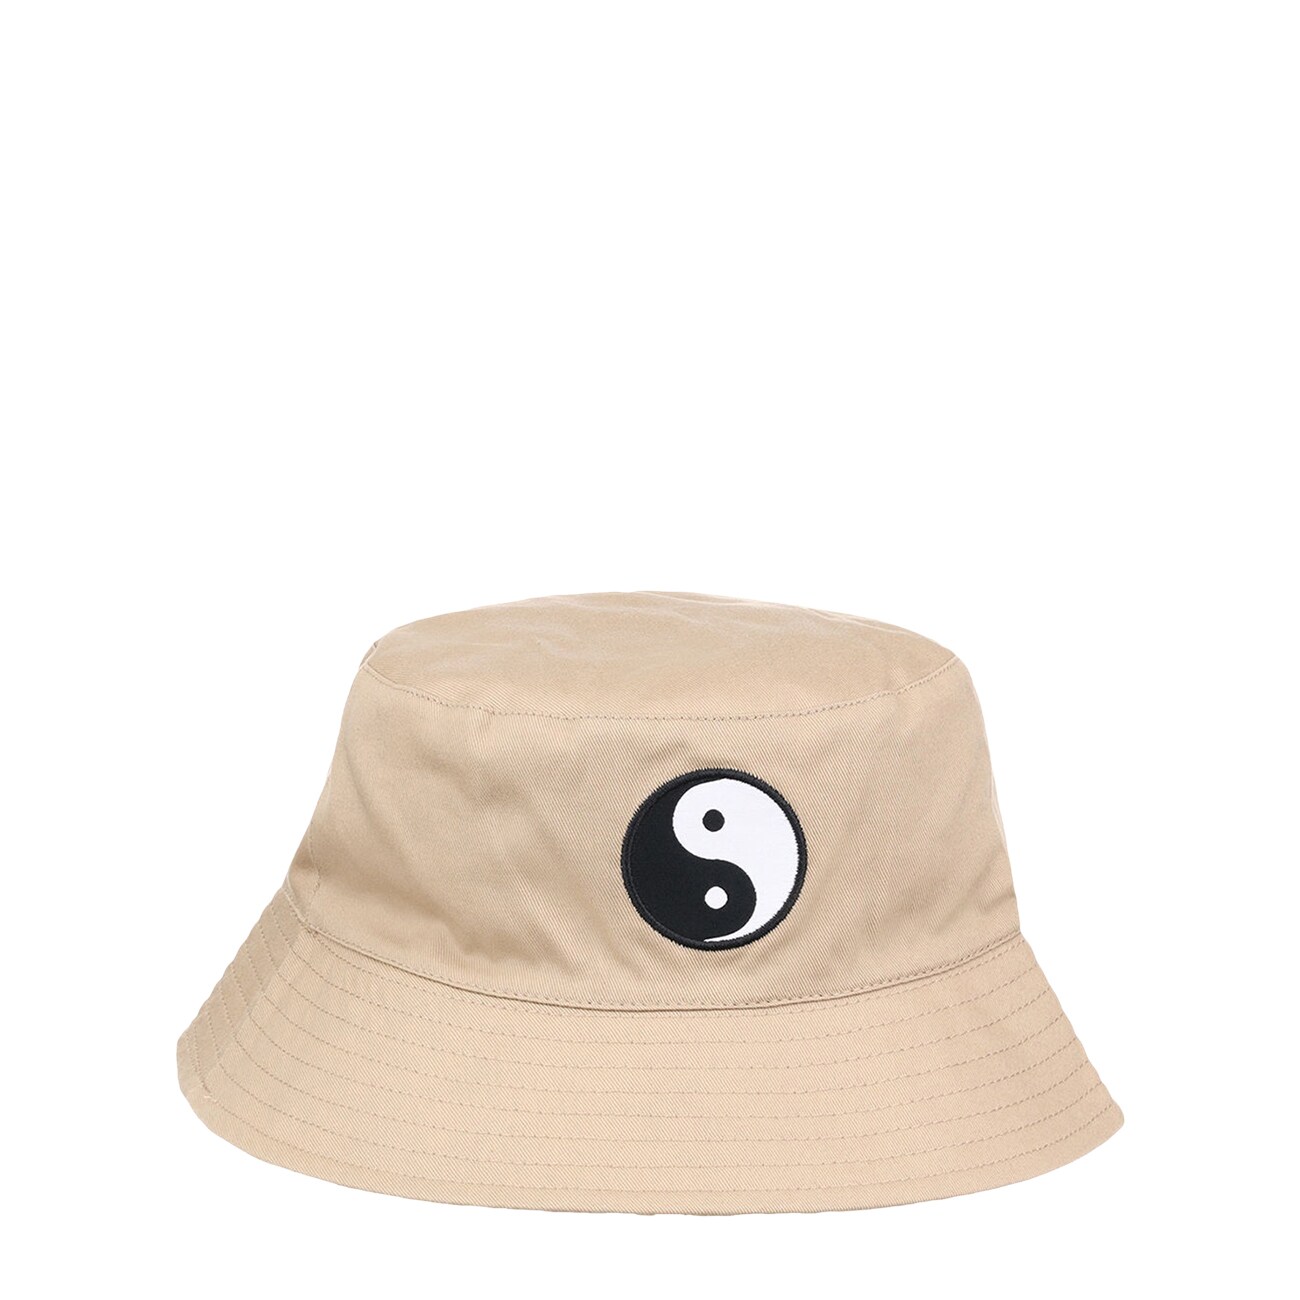 Ying Yang Reversible Bucket Hat